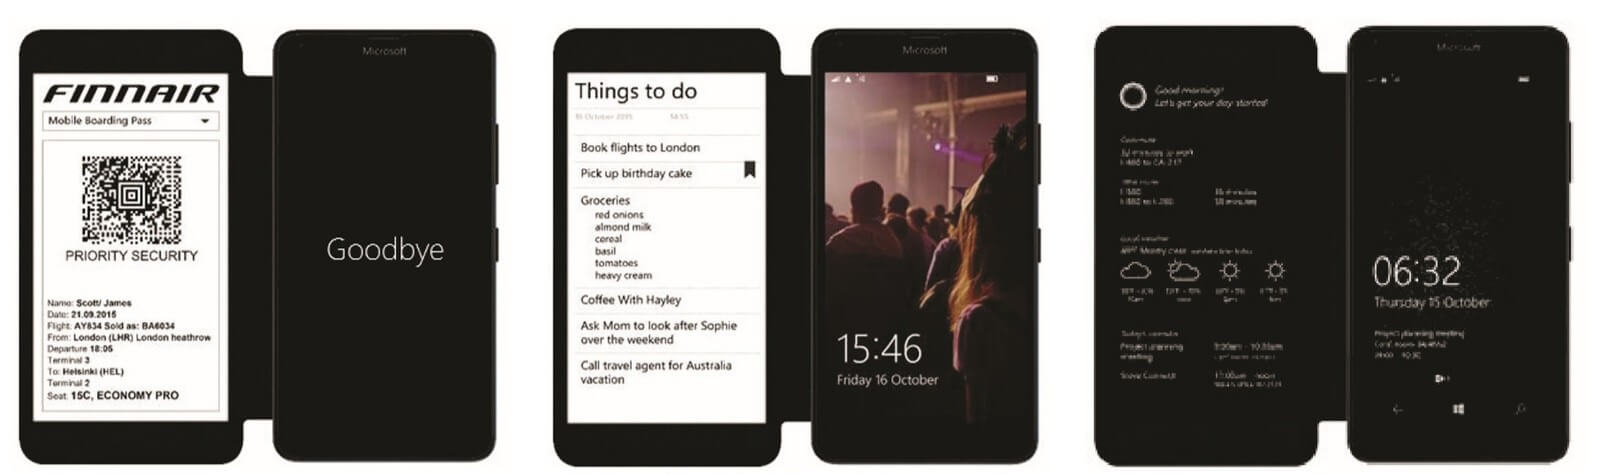 Lumia 640 z ekranem e-ink